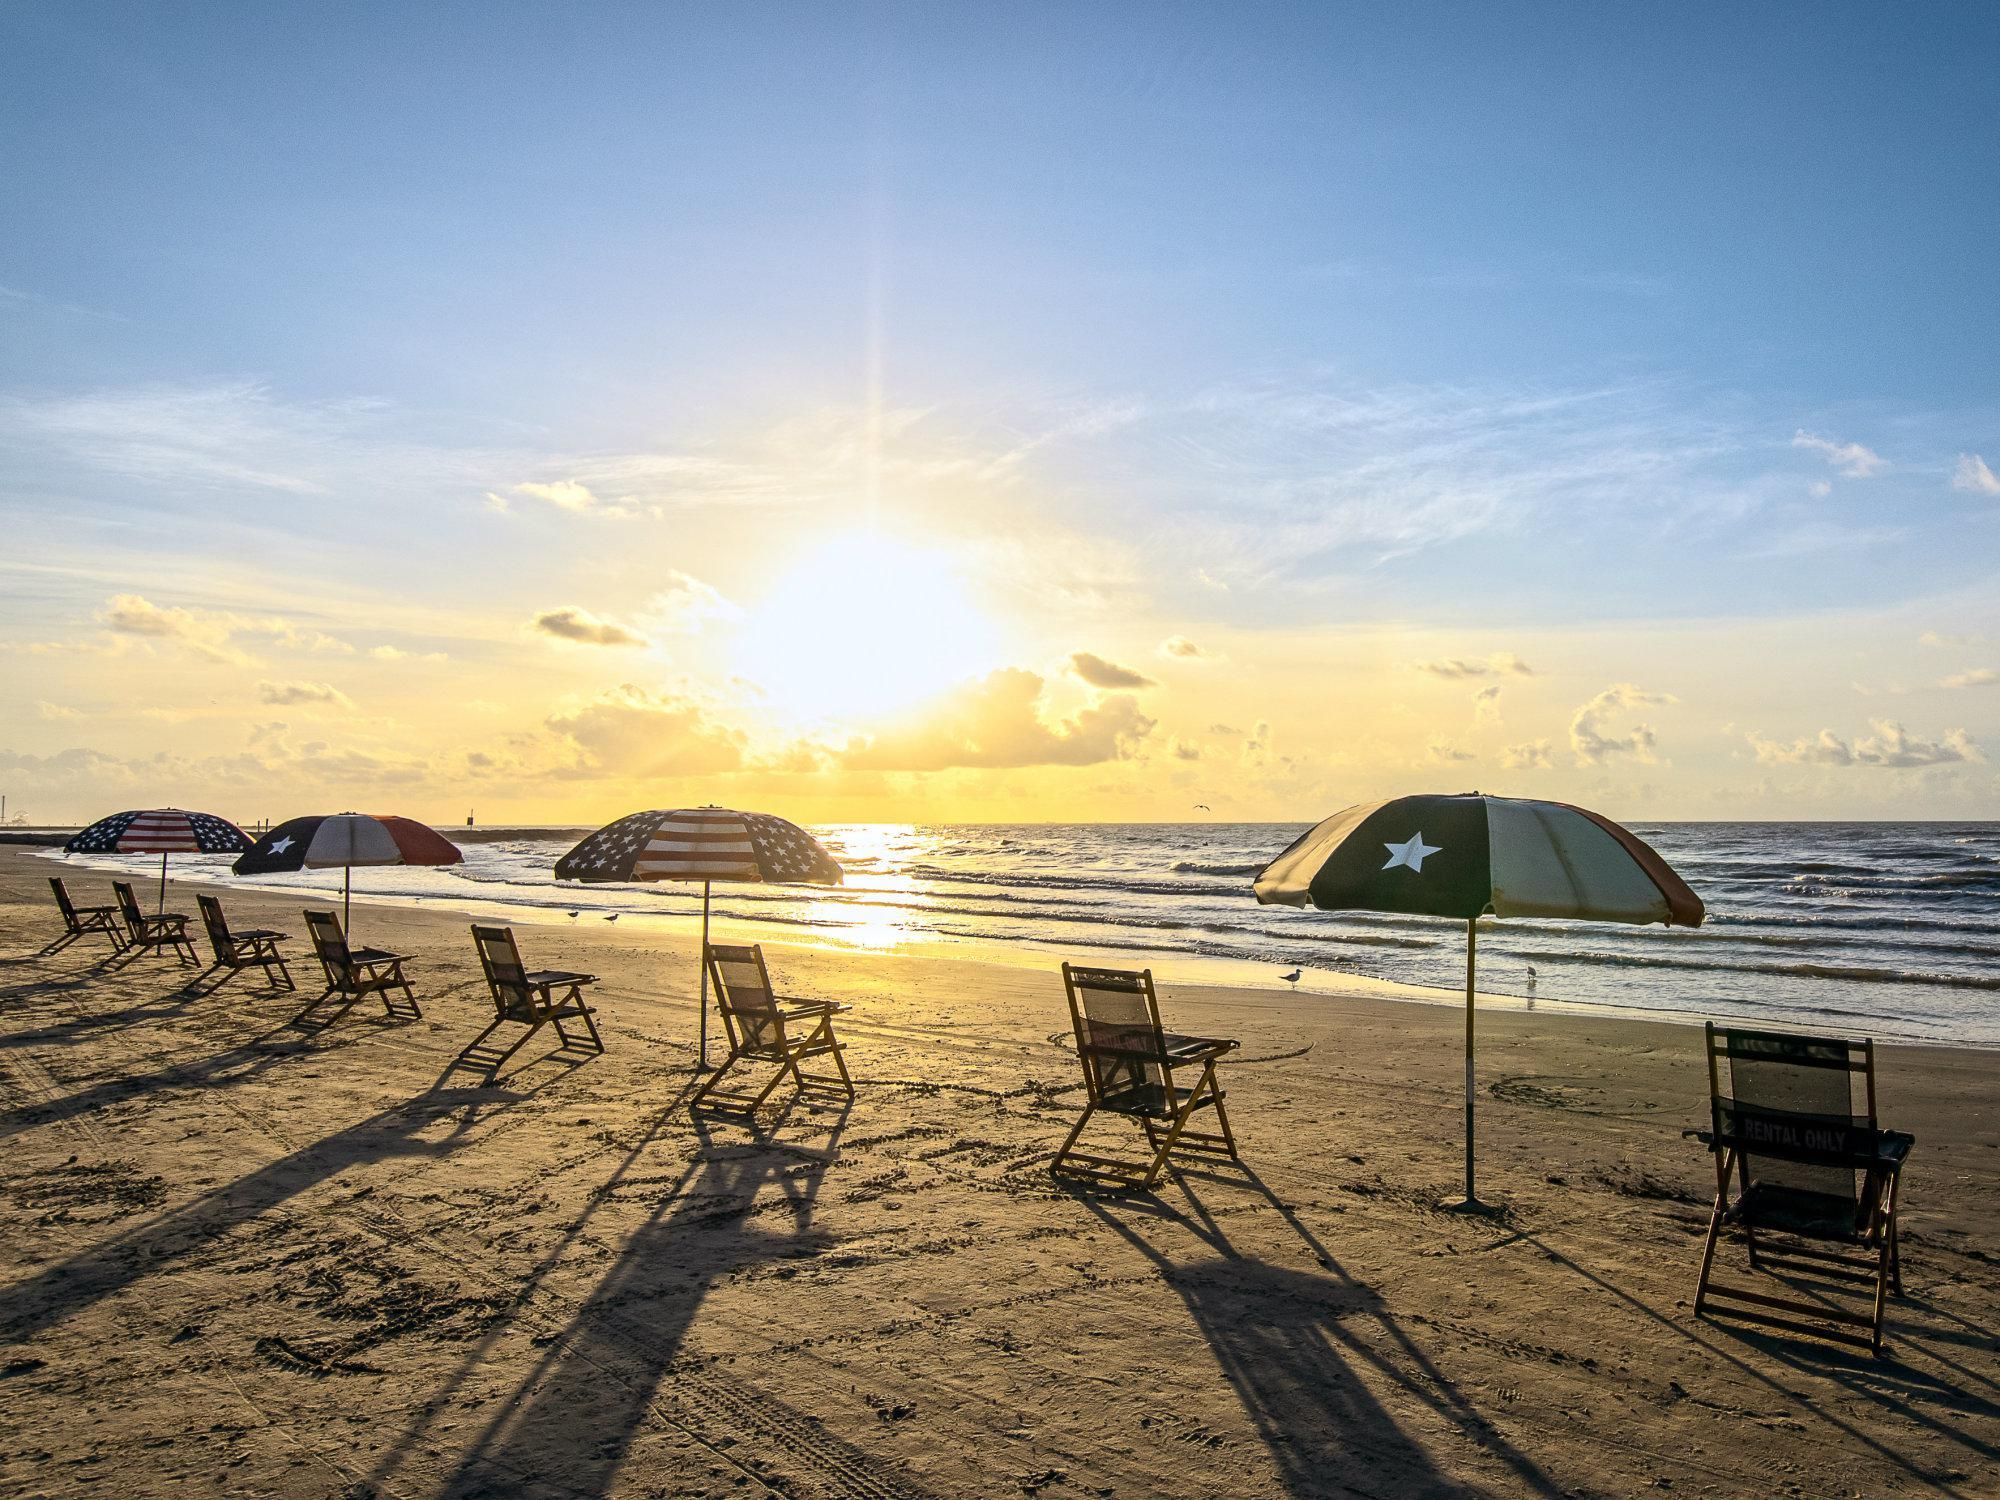 Galveston beach with umbrellas